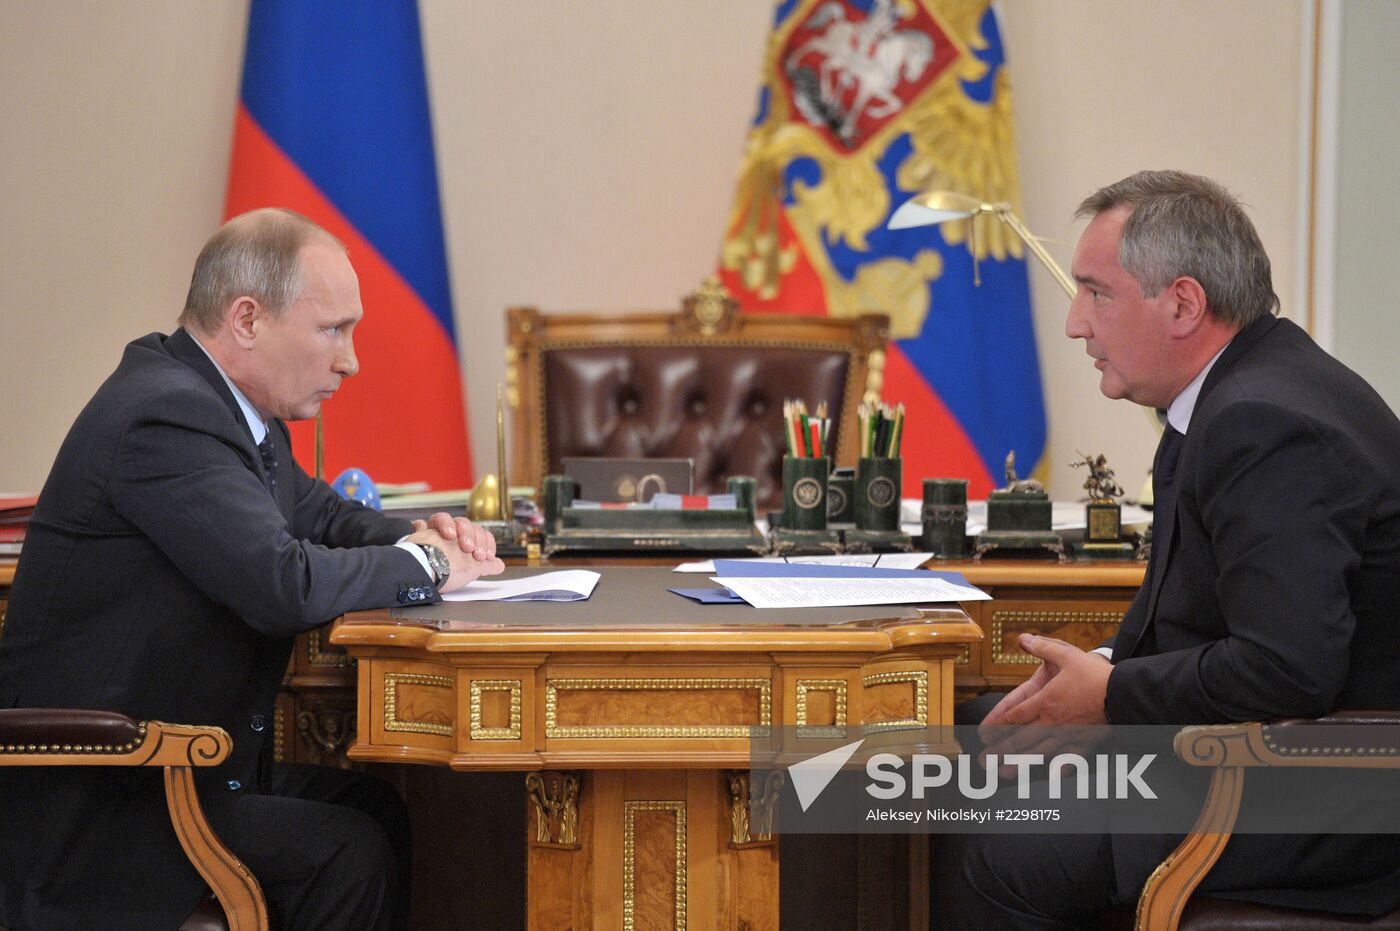 Vladimir Putin meets with Dmitry Rogozin